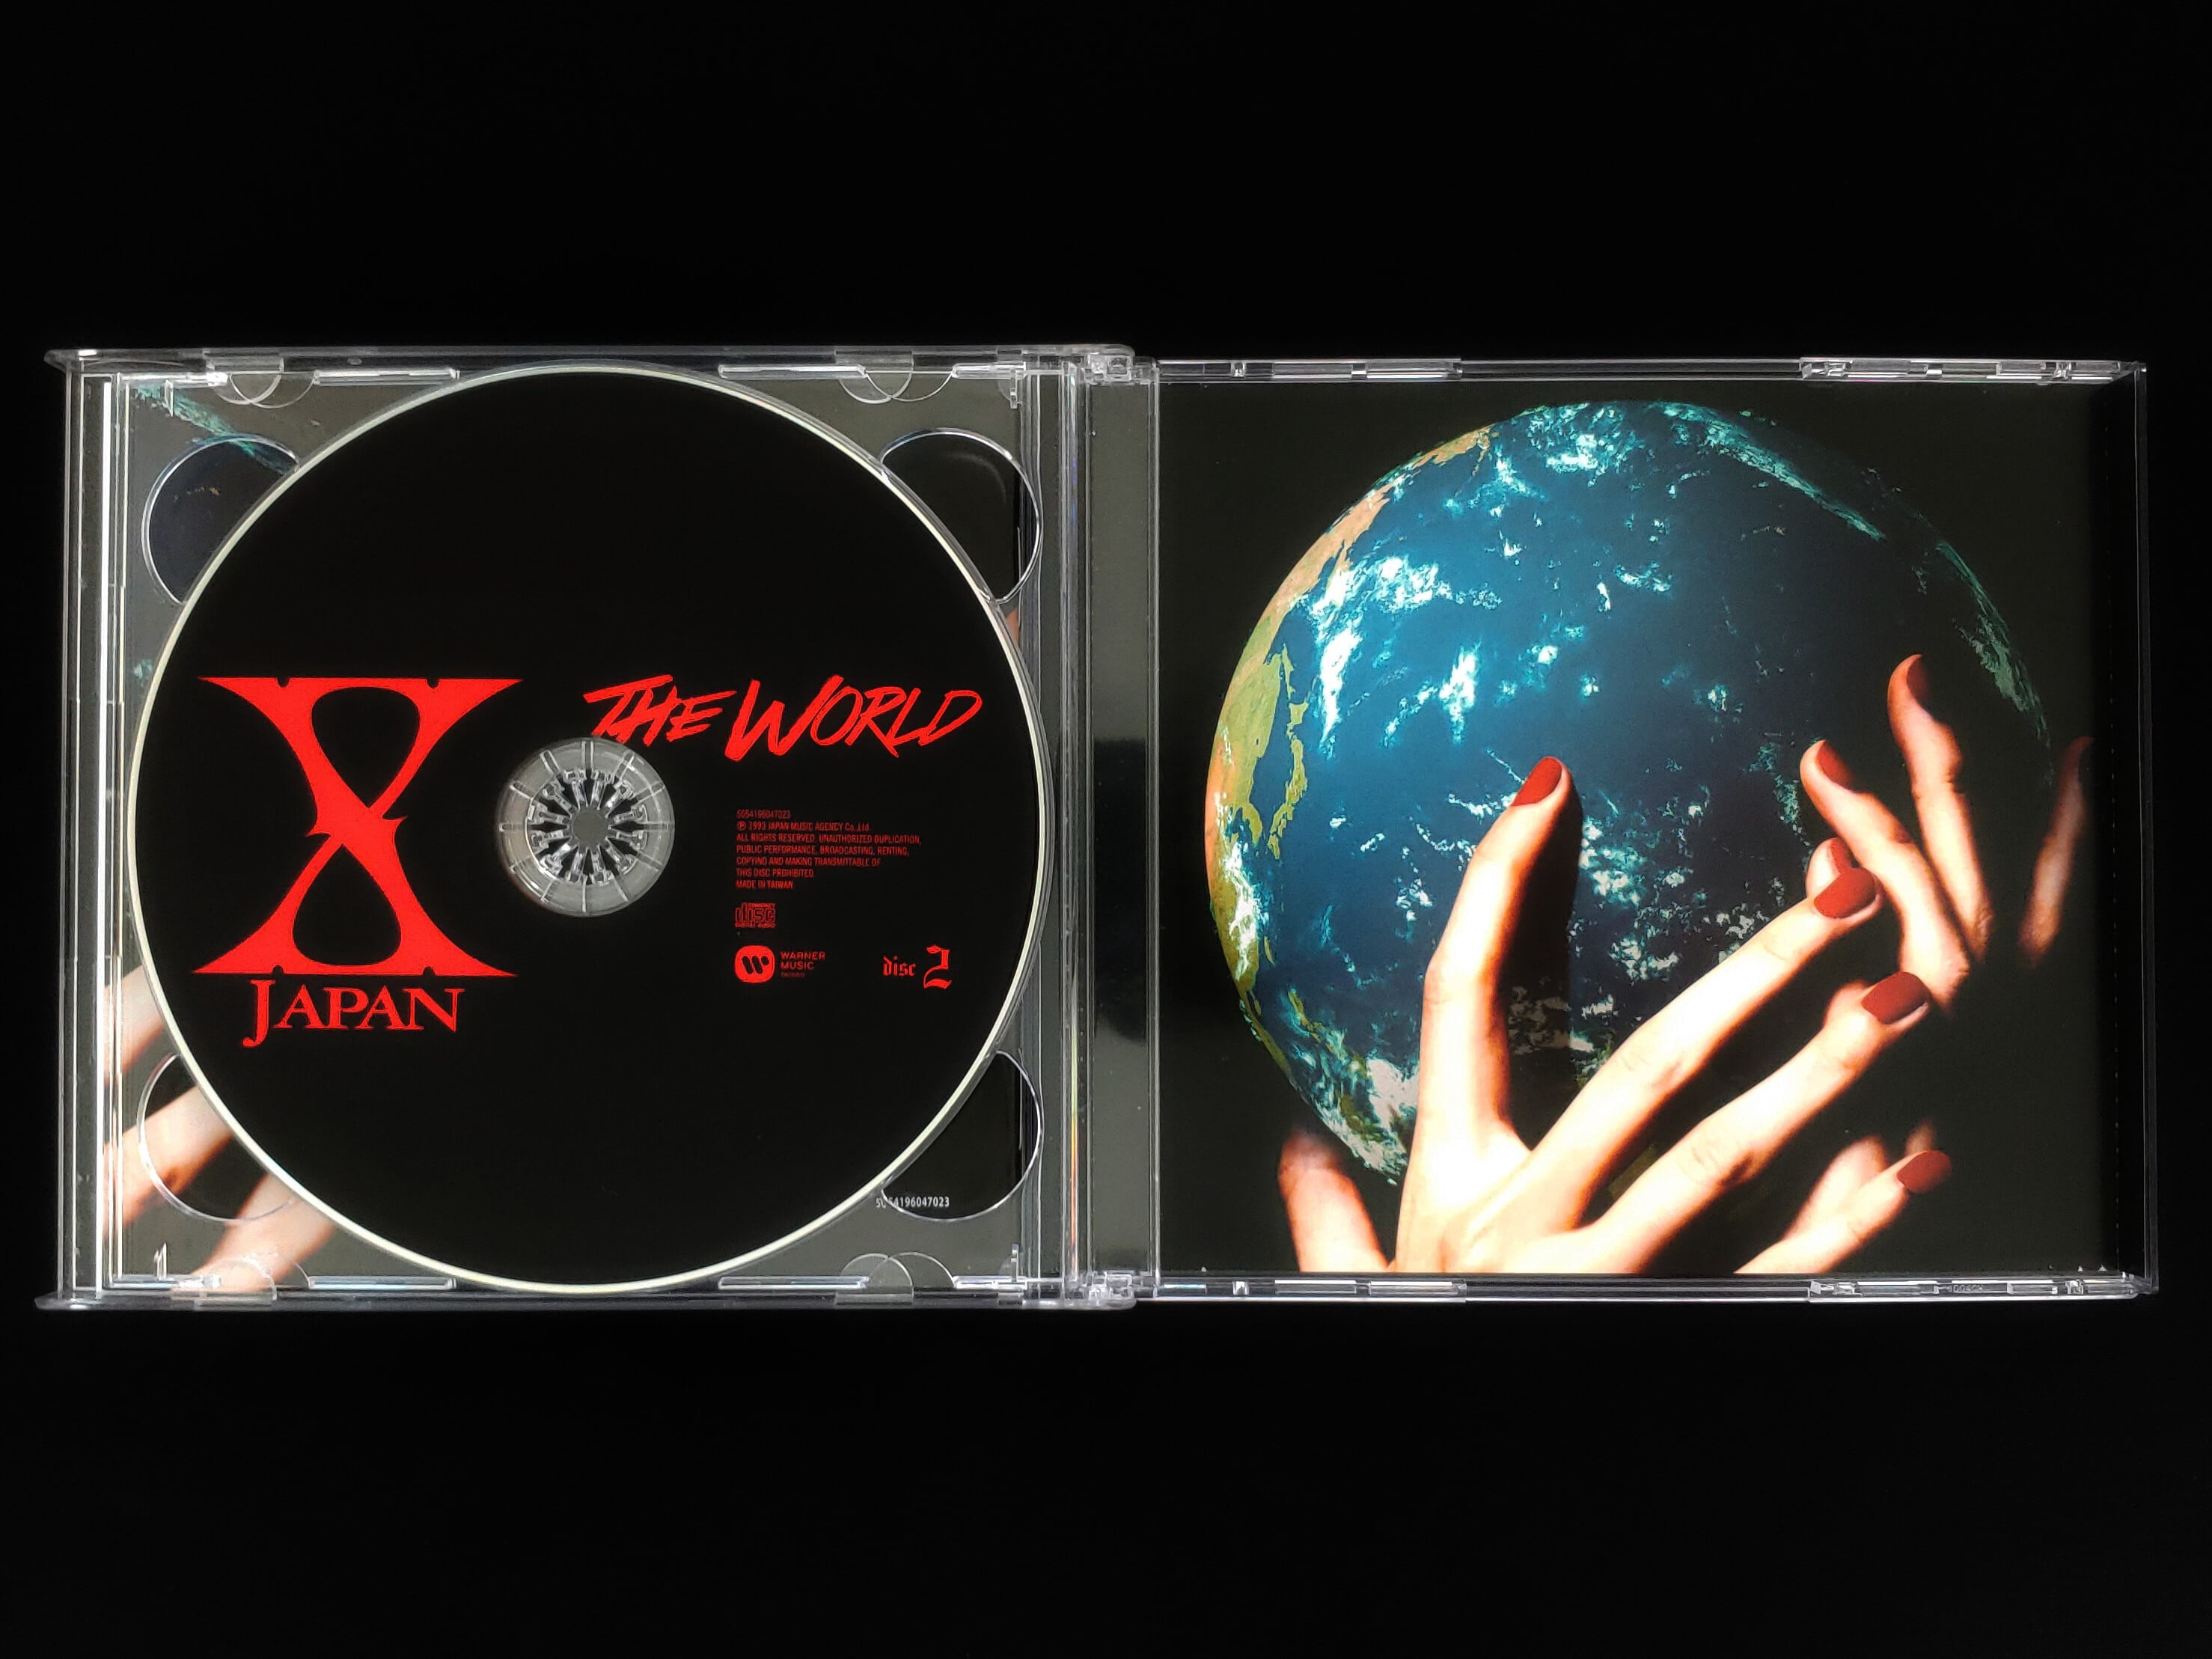 X JAPAN (엑스 재팬) - The World (리마스터, 베스트)